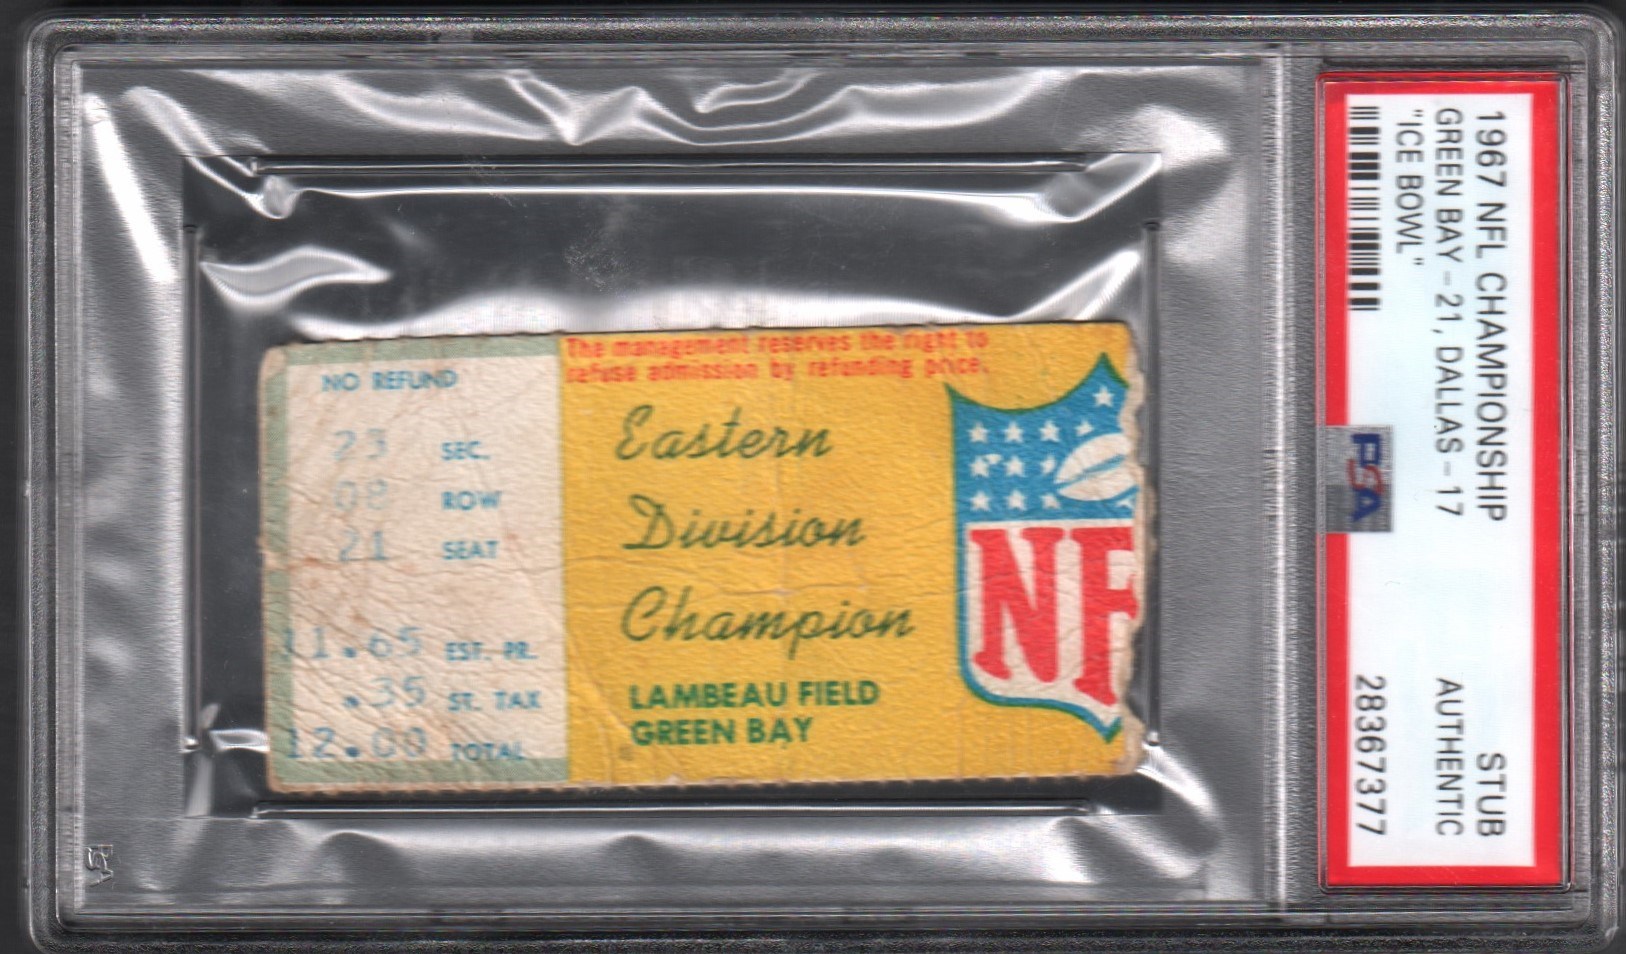 1967 NFL Championship "Ice Bowl' Ticket Stub